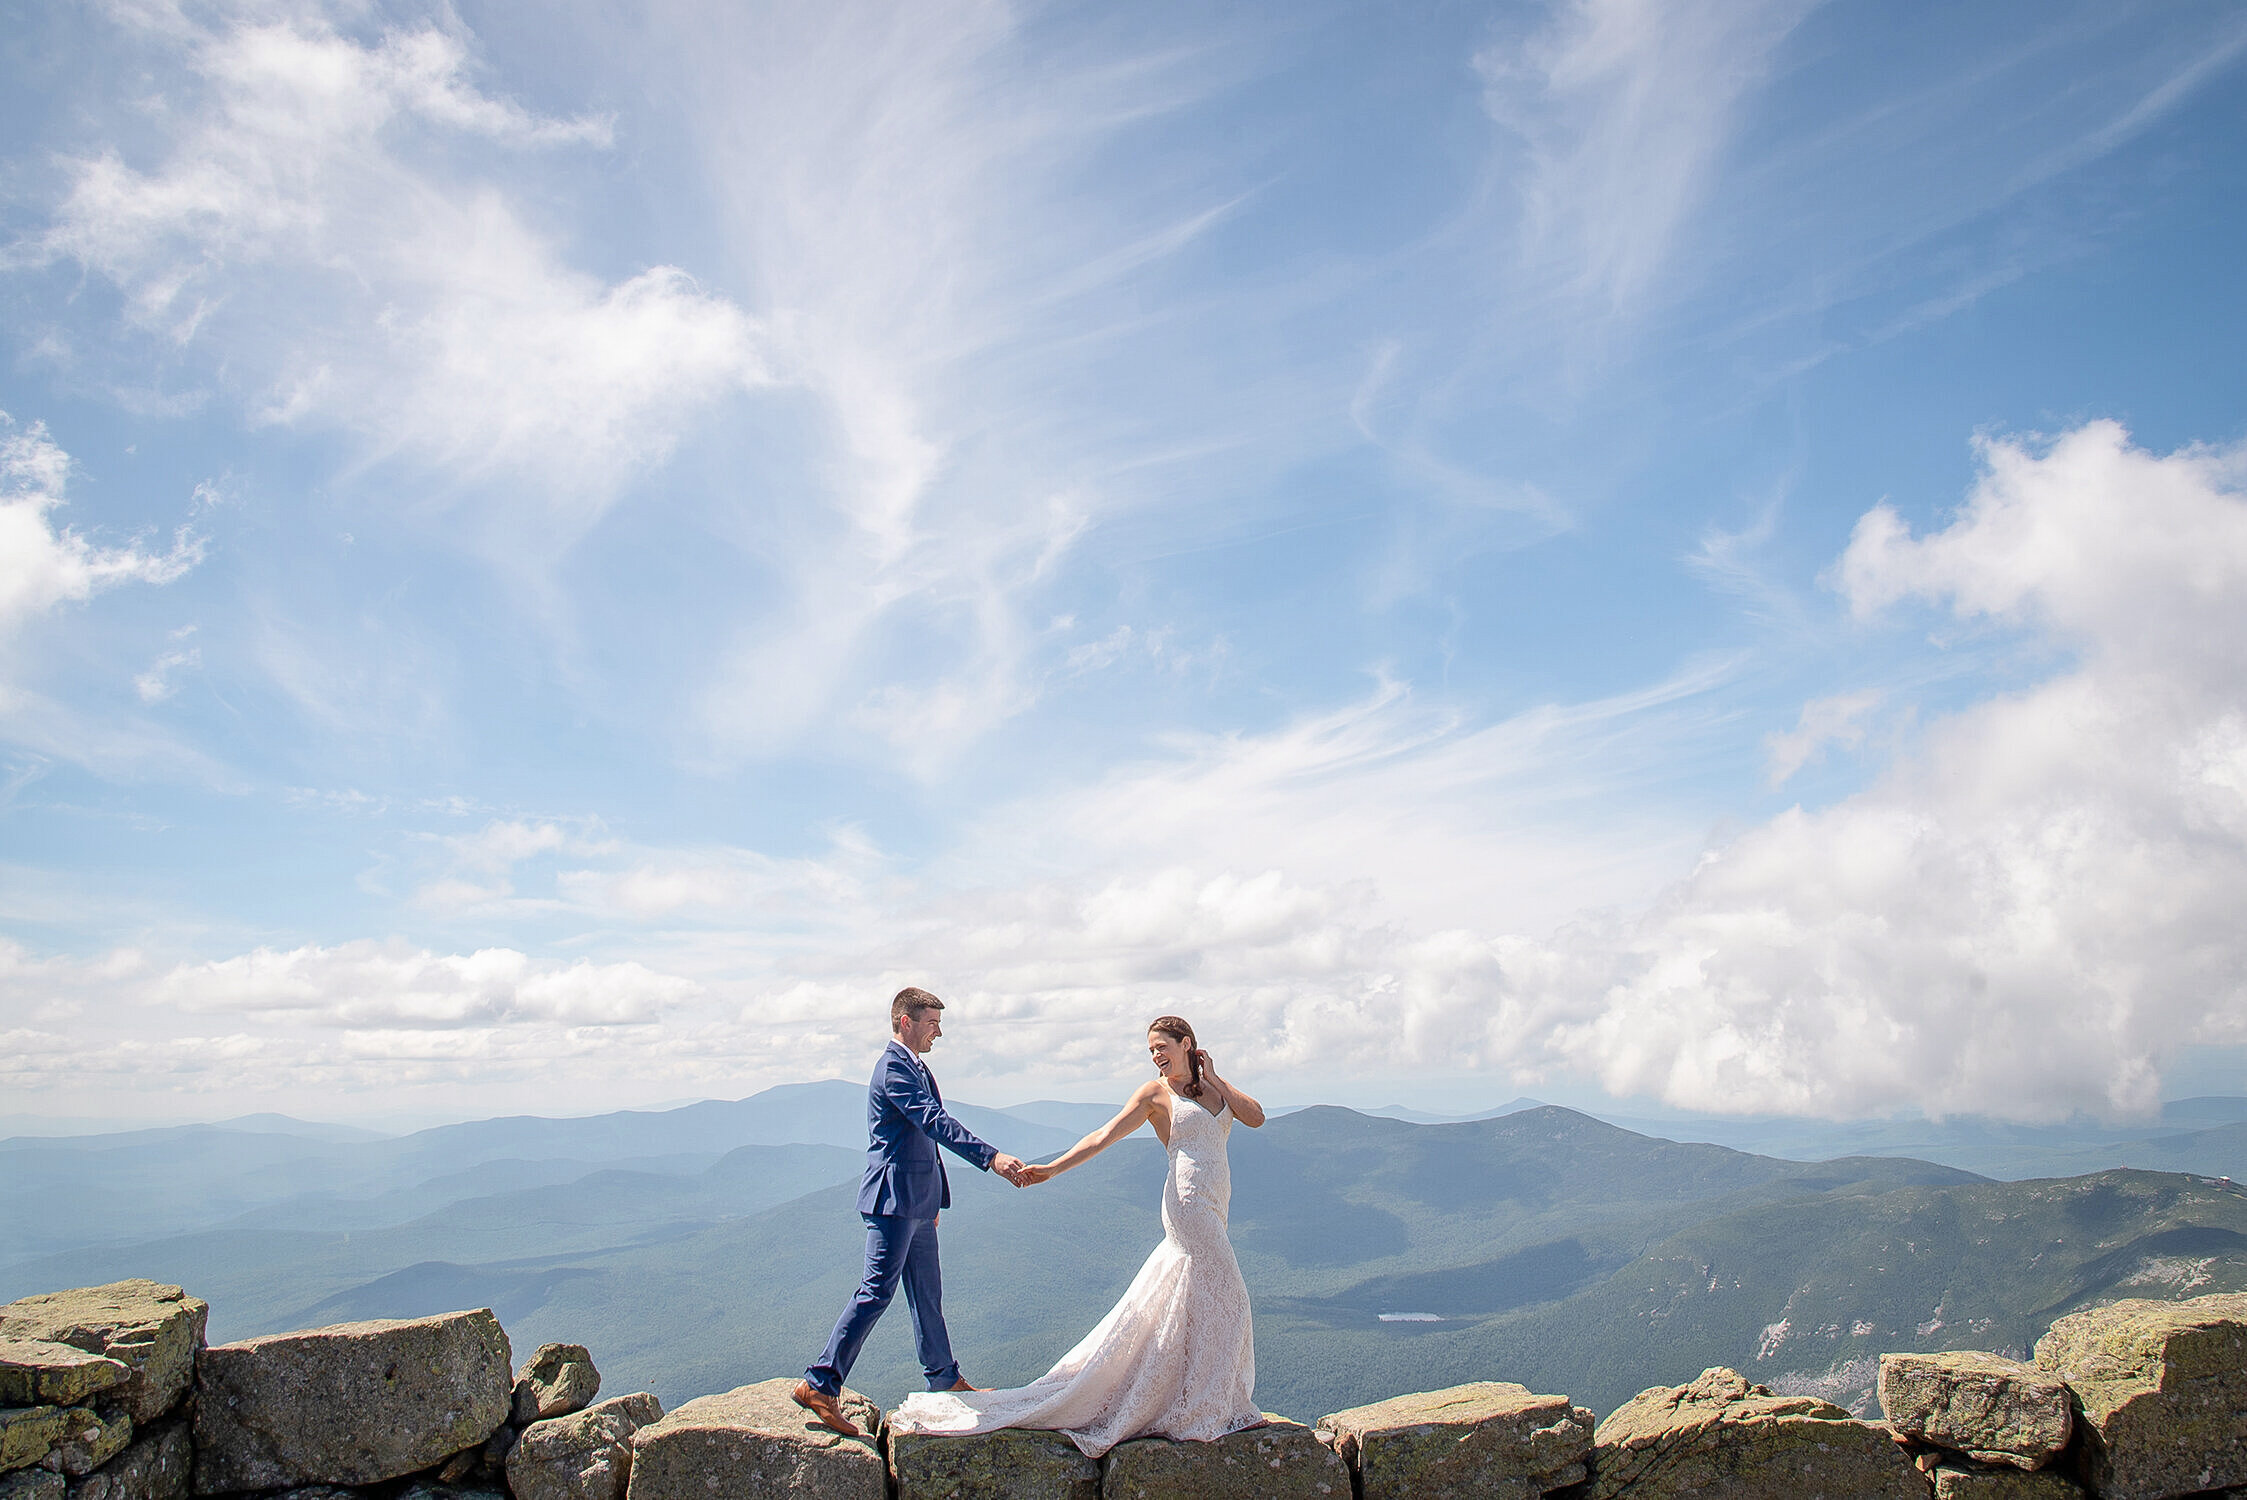 081818+-+New+Hampshire+Wedding+Photographers,+Adventure+Wedding+Photographers+-+426v2.jpg